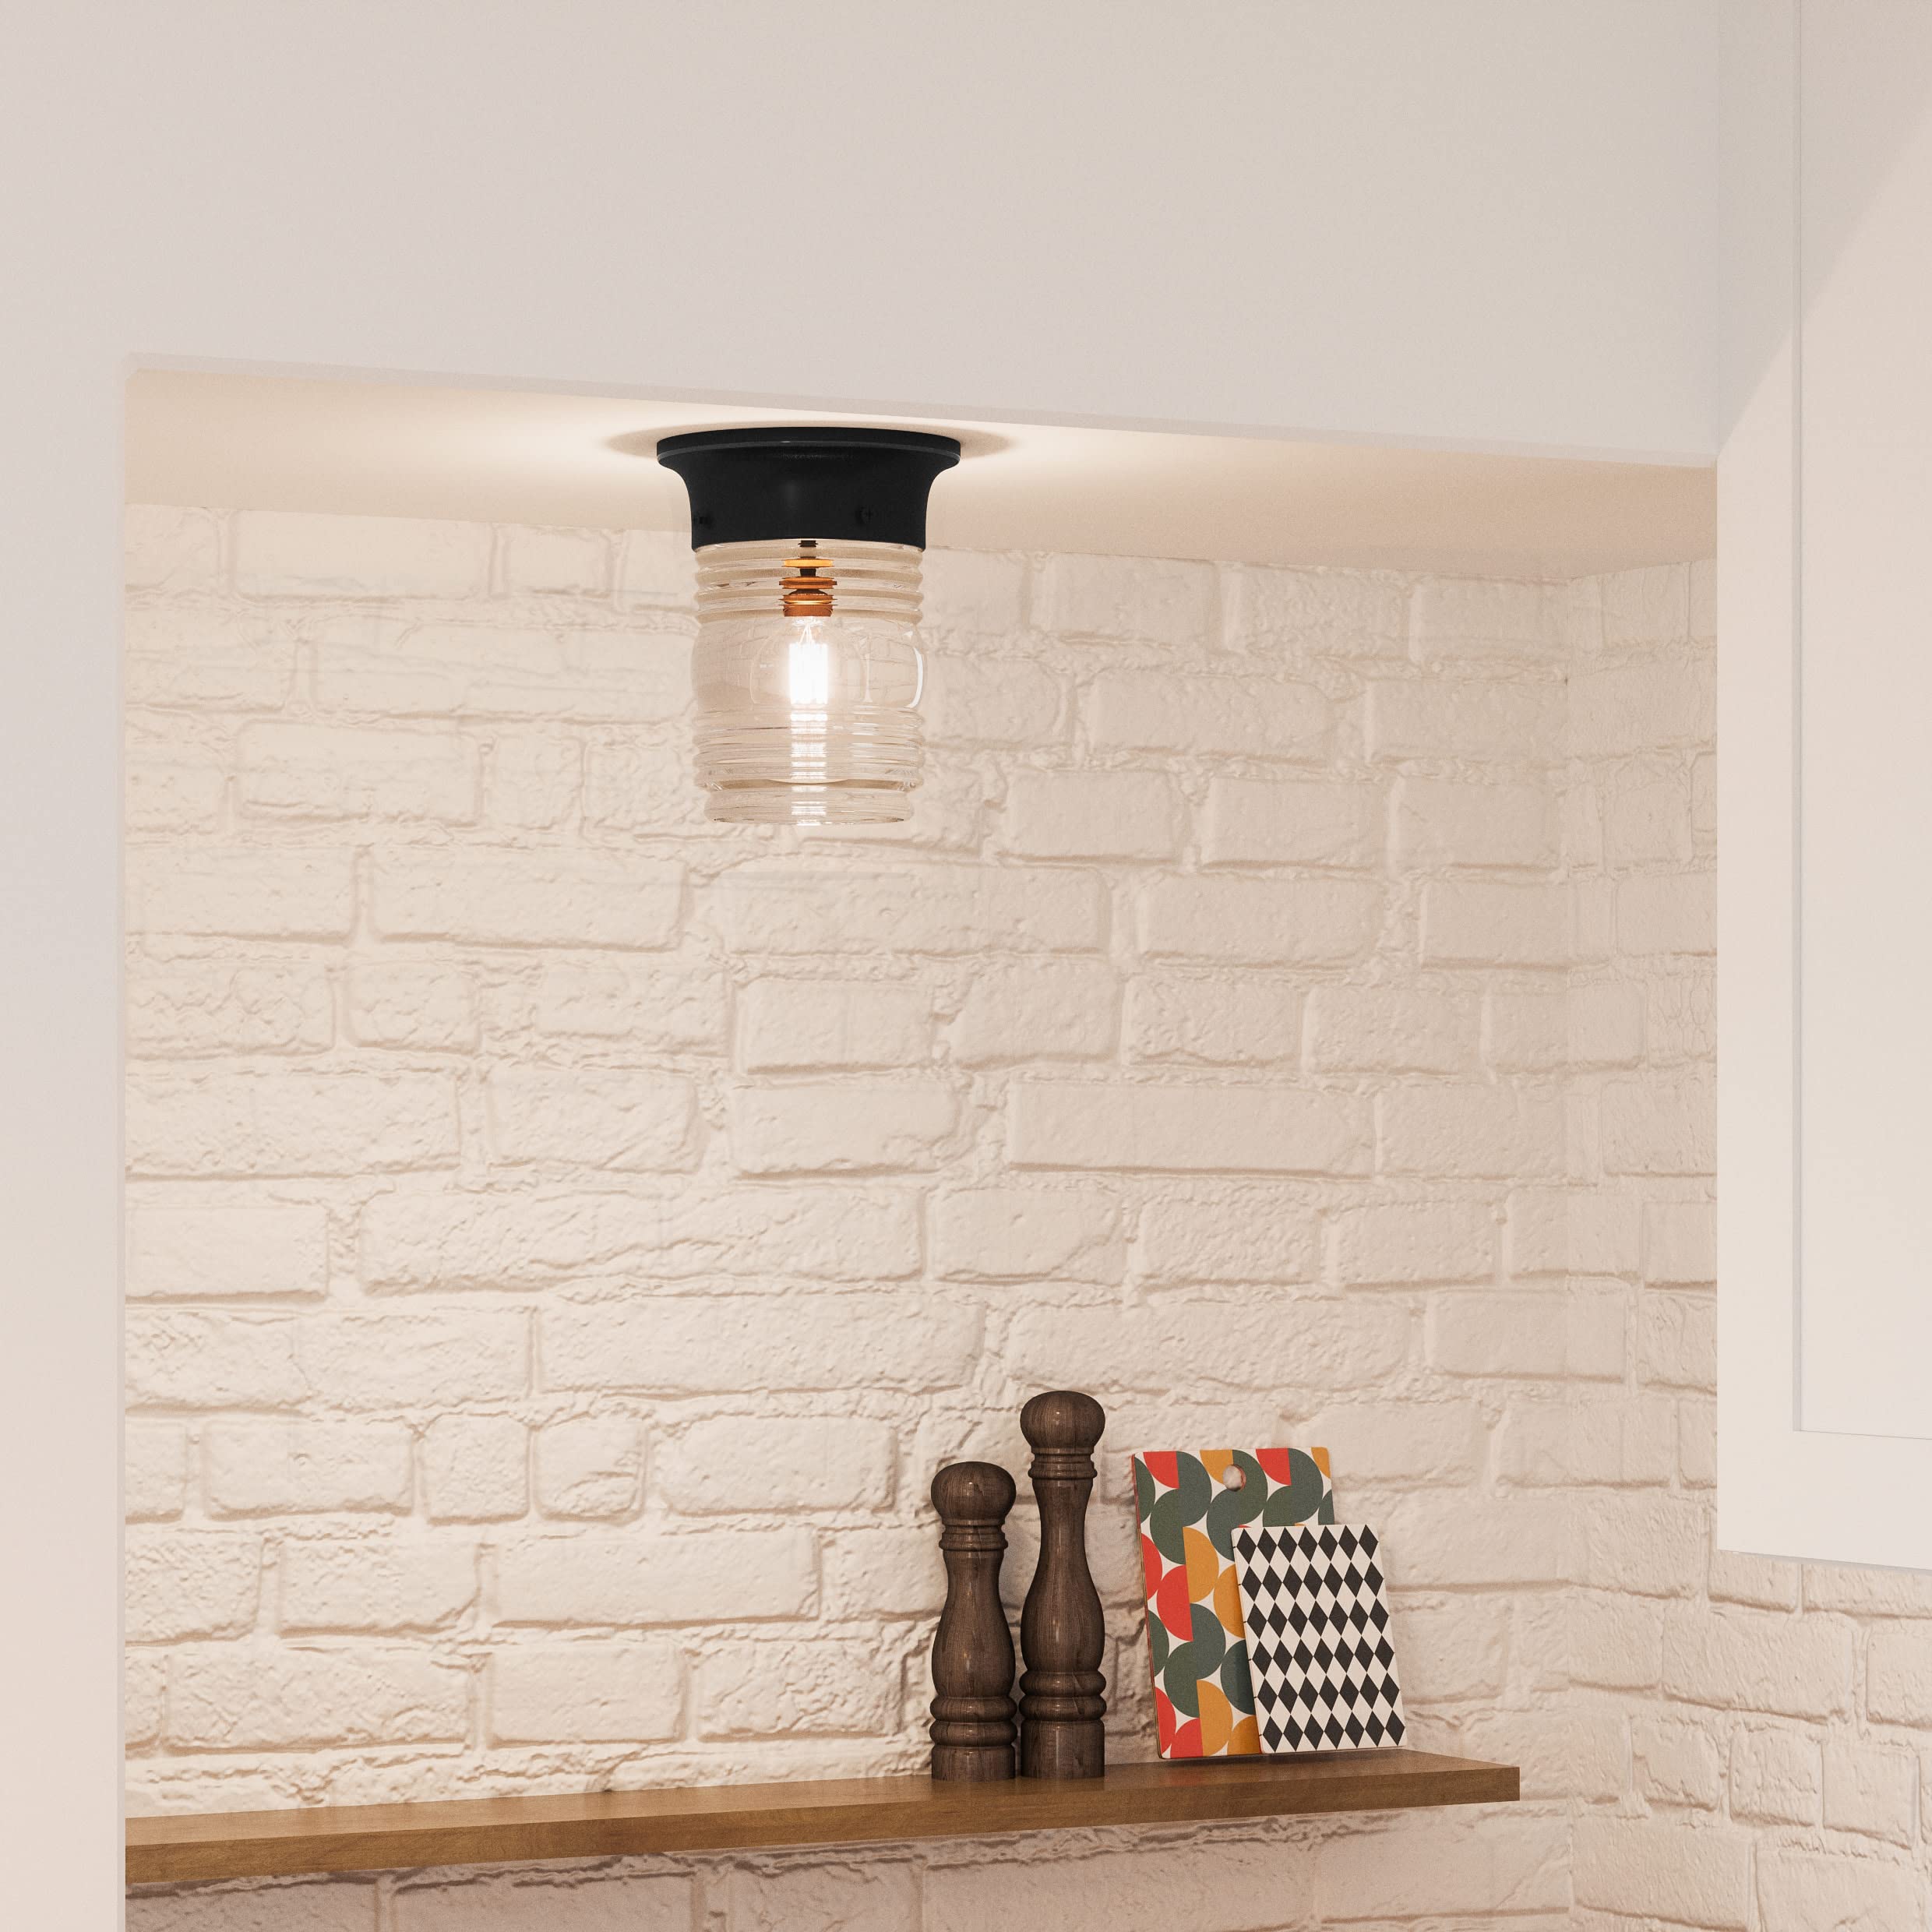 Design House 587220 Jelly Jar 1-Light Indoor/Outdoor Flush Mount Ceiling Light, Black